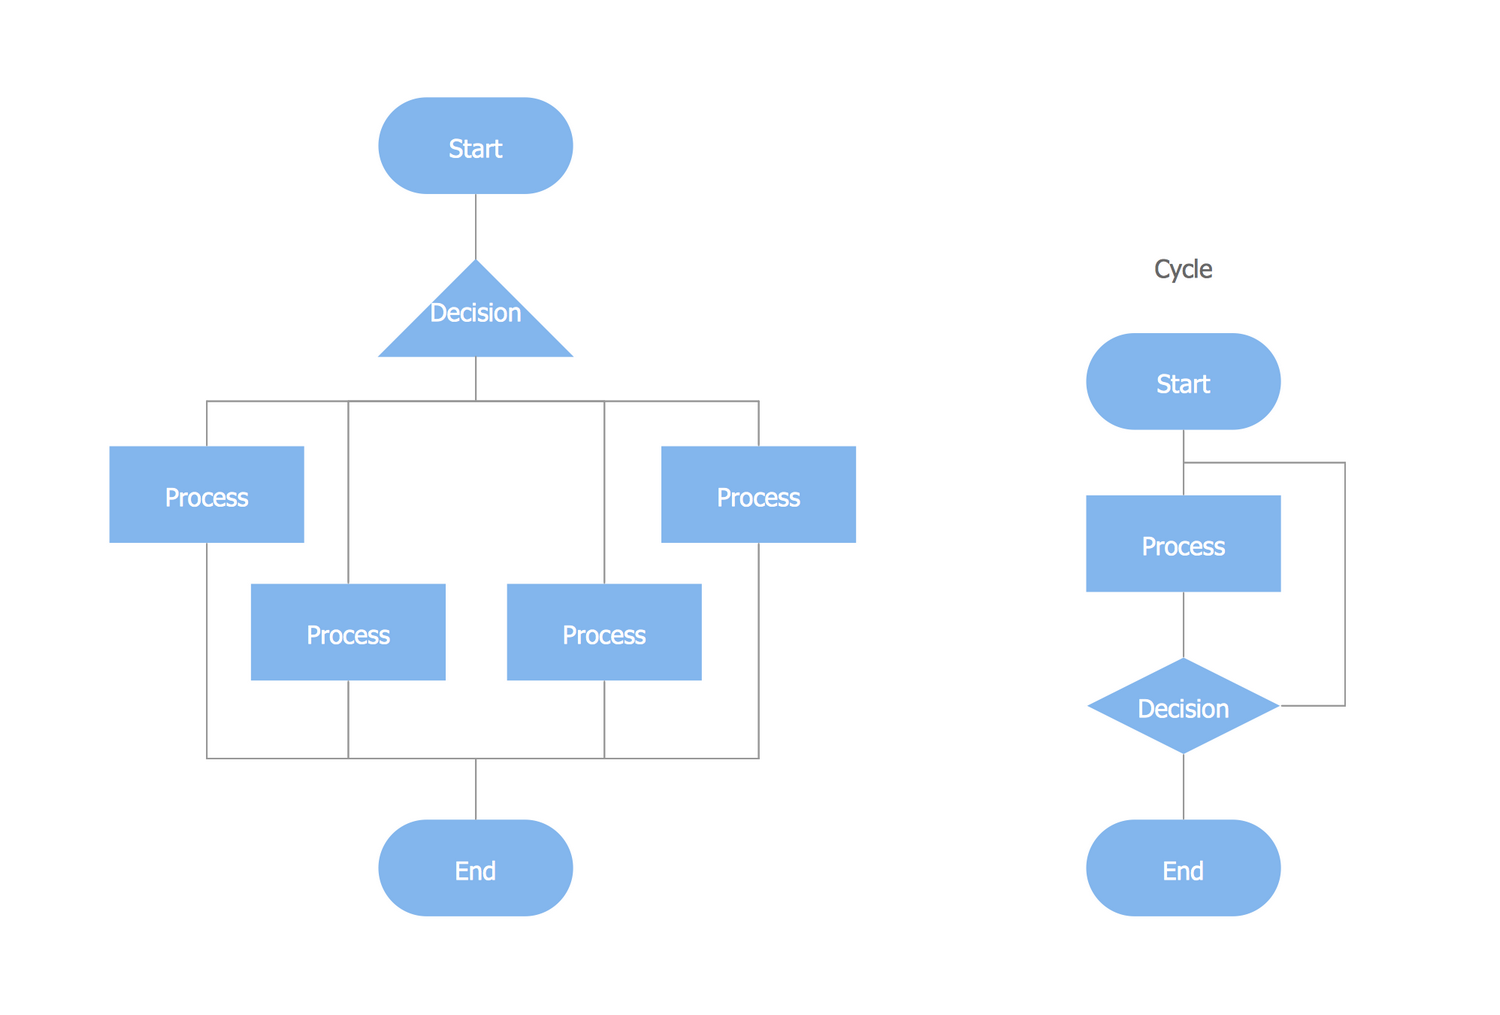 [DIAGRAM] Process Flow Diagram Benefits - MYDIAGRAM.ONLINE